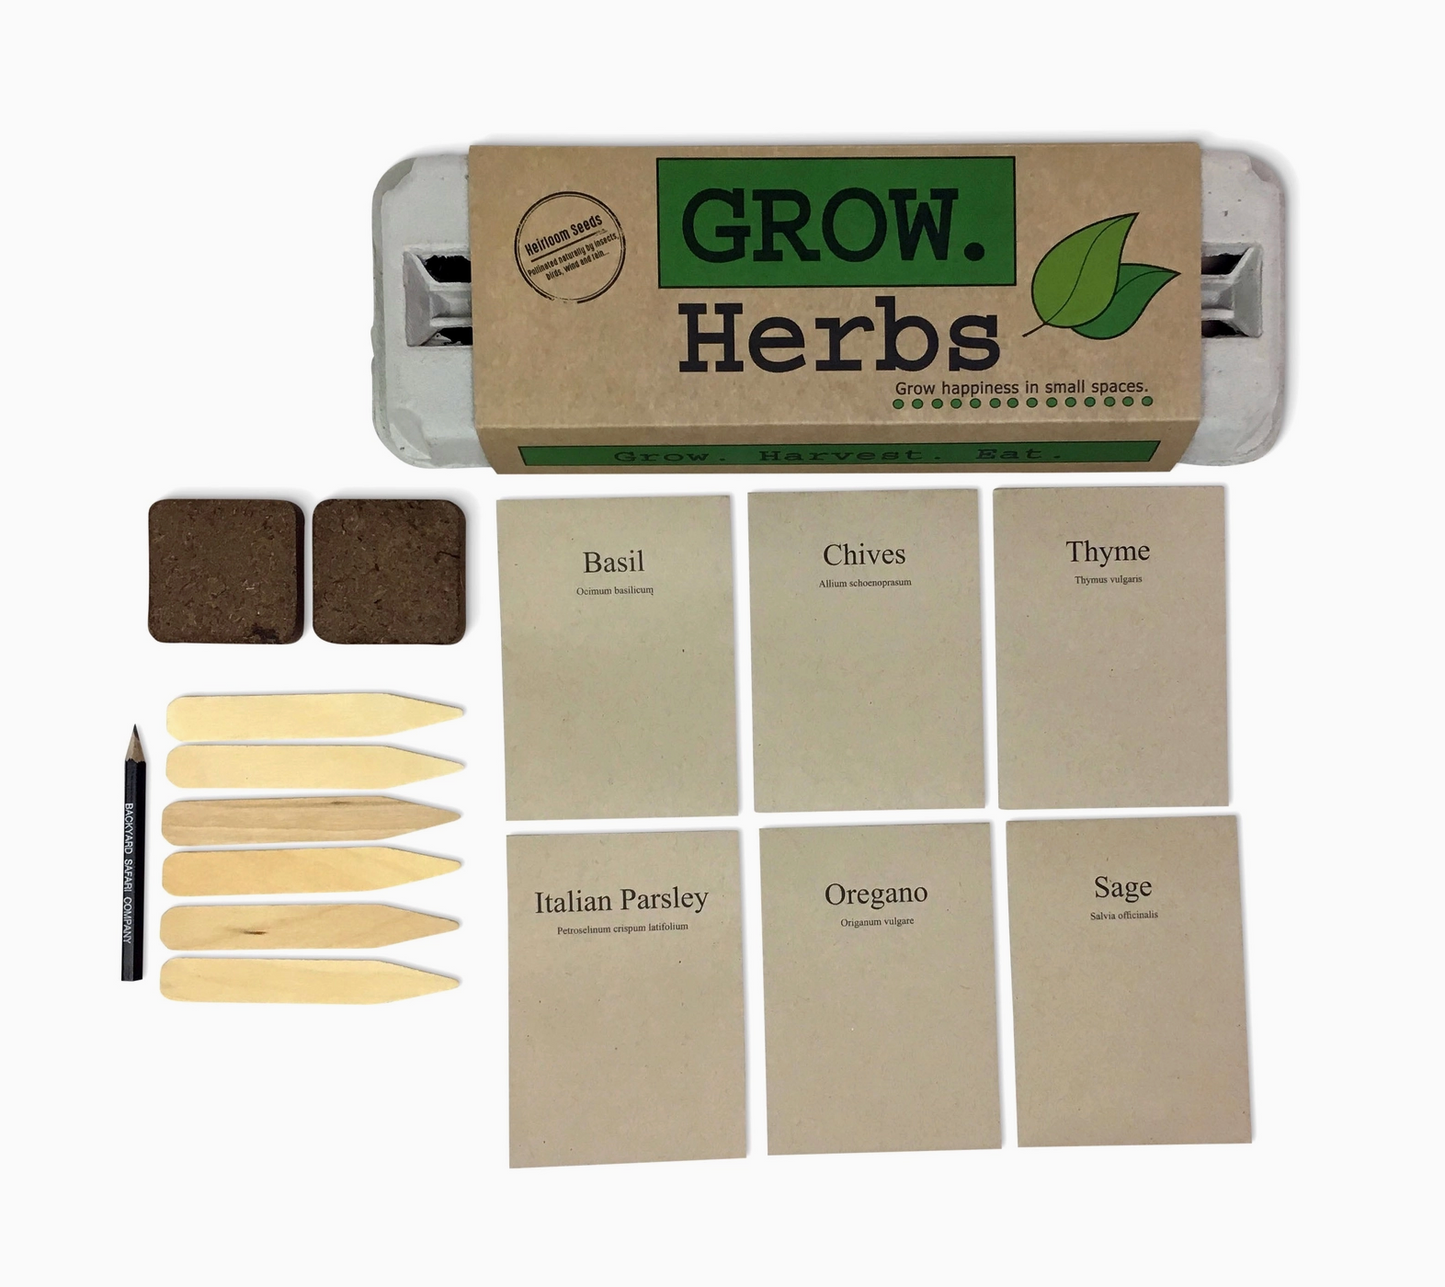 Herb Garden Grow Kit